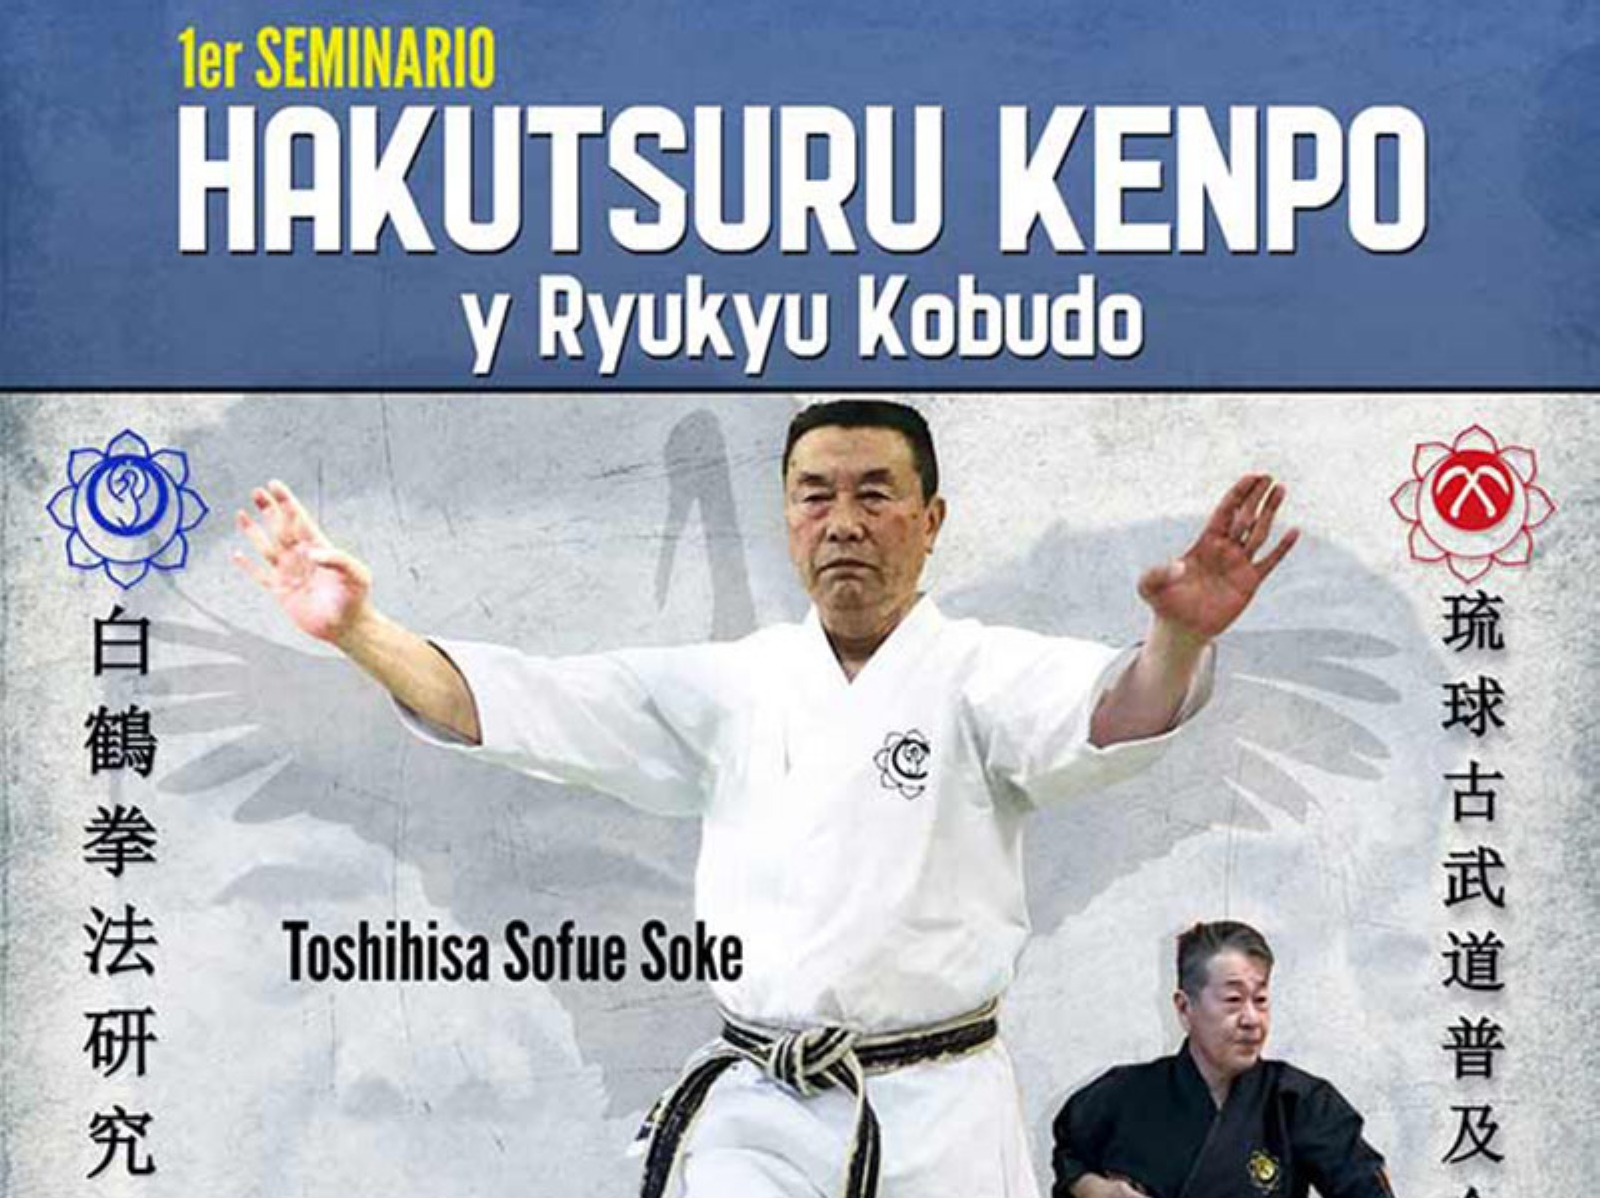 Hakutsuru Kenpo y Ryukyu Kobudo en Cunit